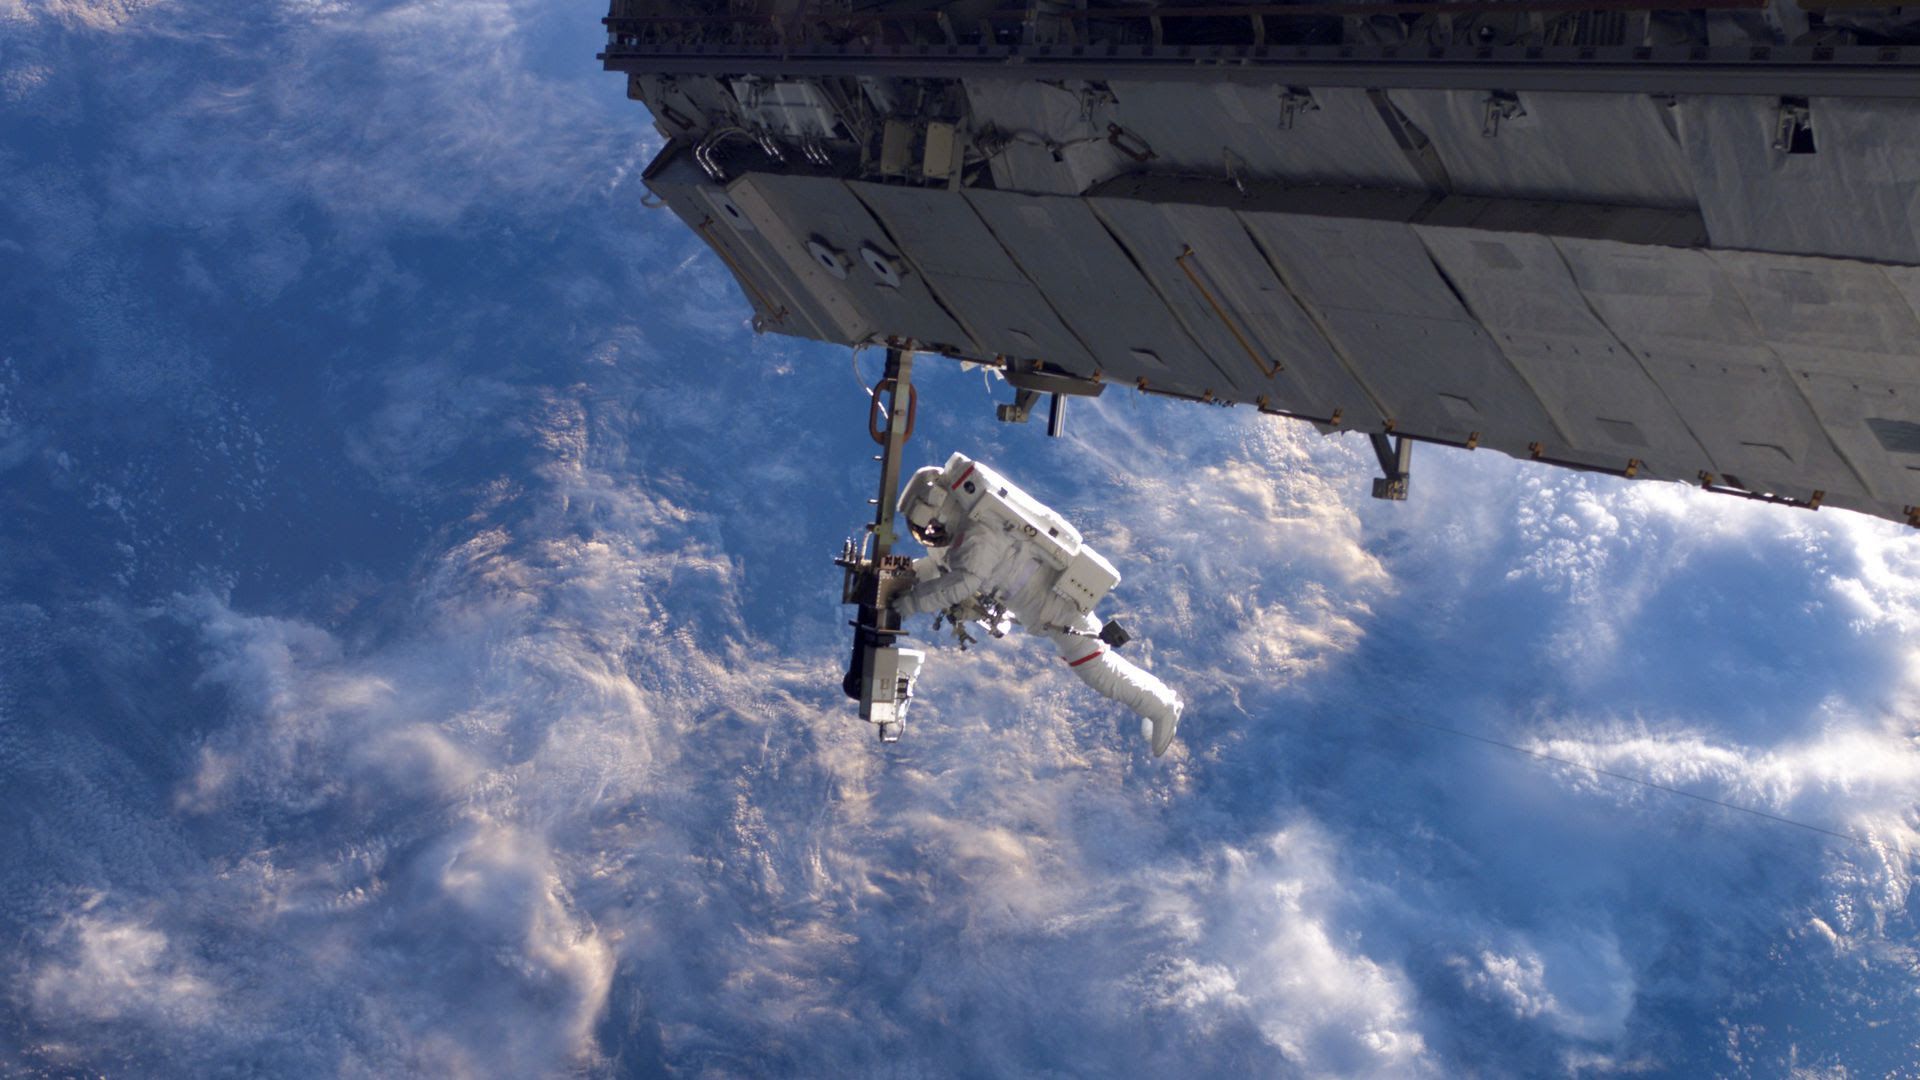 NASA astronaut Robert Curbeam on a spacewalk in 2006. Photo: NASA